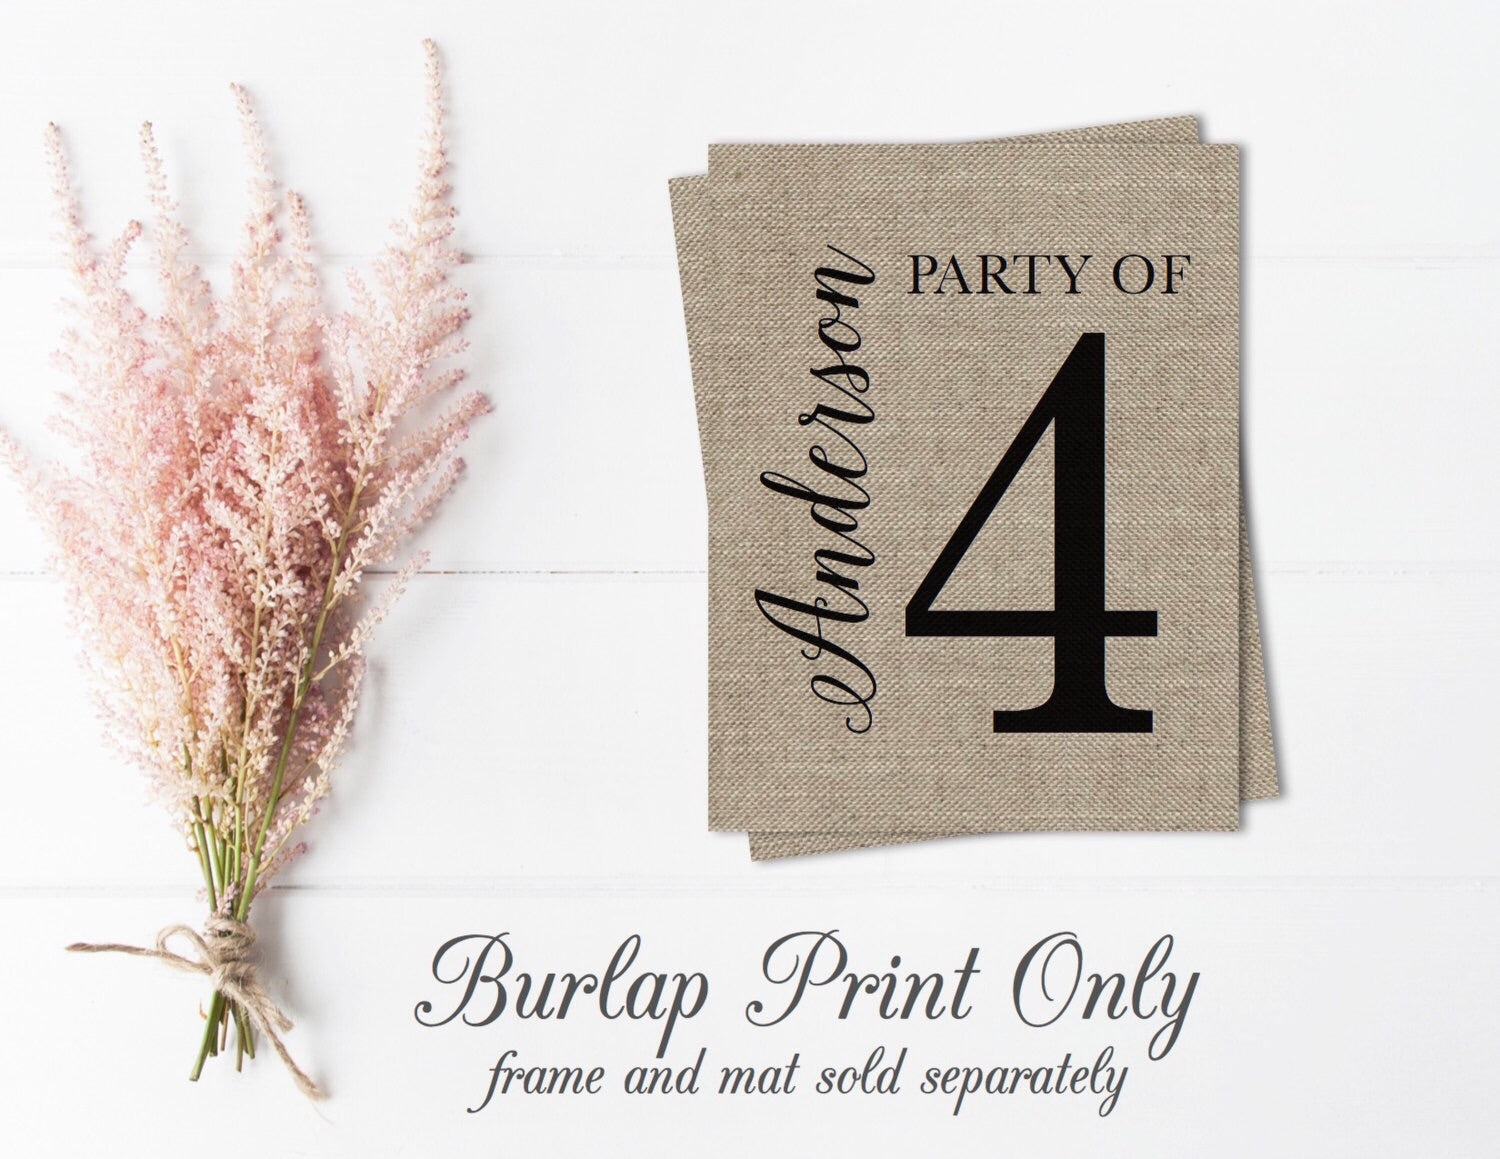 Party of Burlap Print - Farmhouse Style Family Name Sign